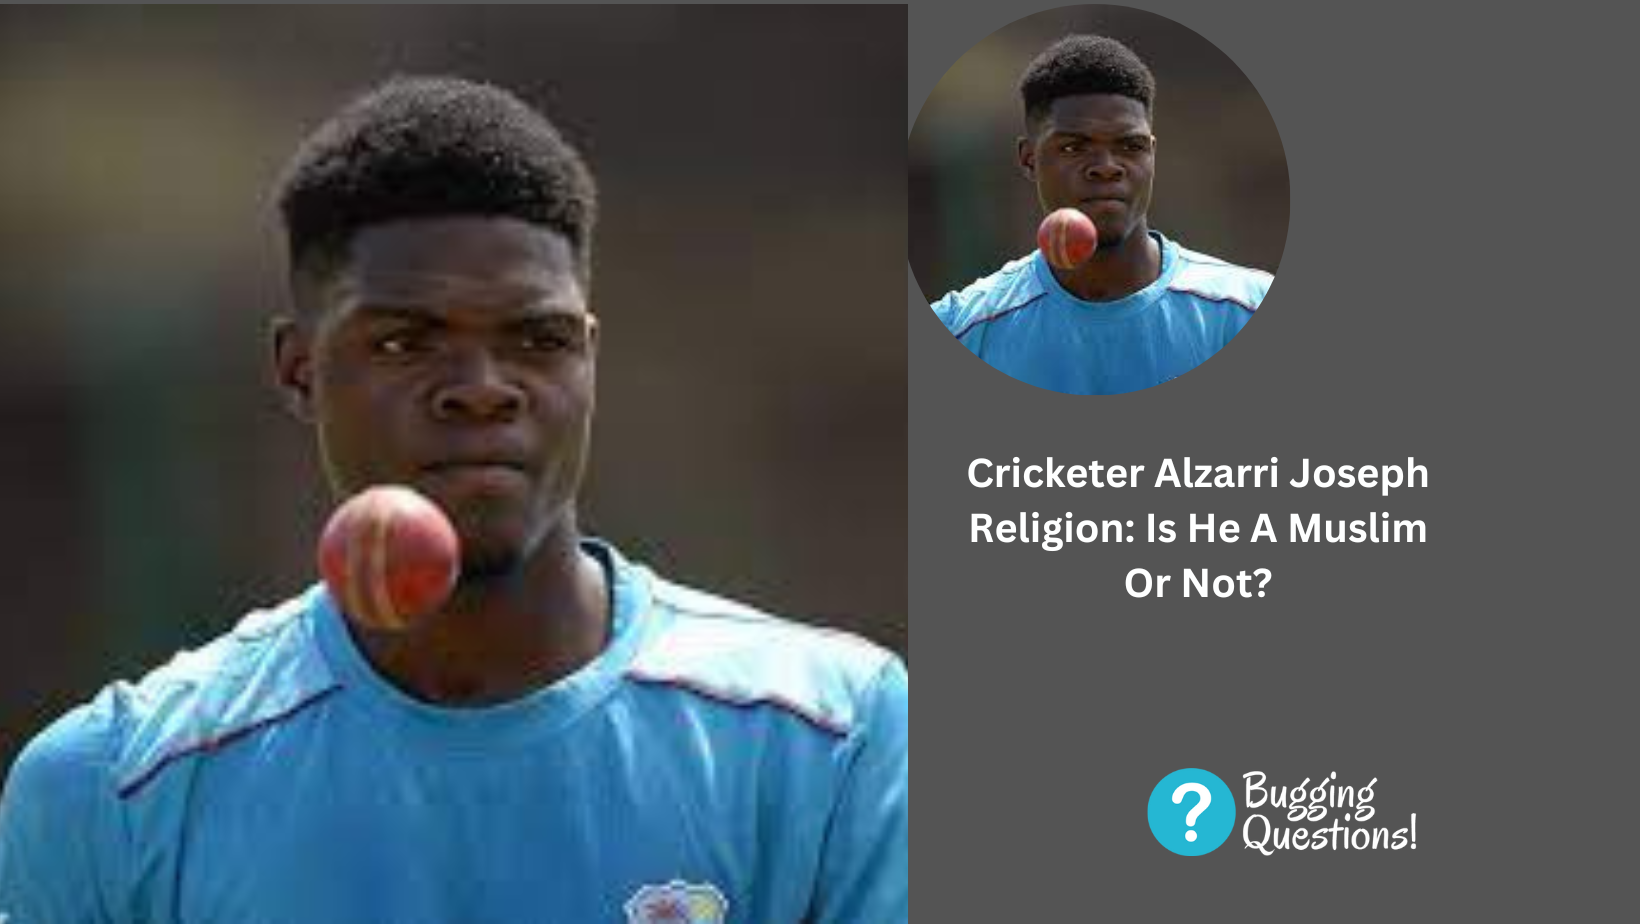 Cricketer Alzarri Joseph Religion: Is He A Muslim Or Not?